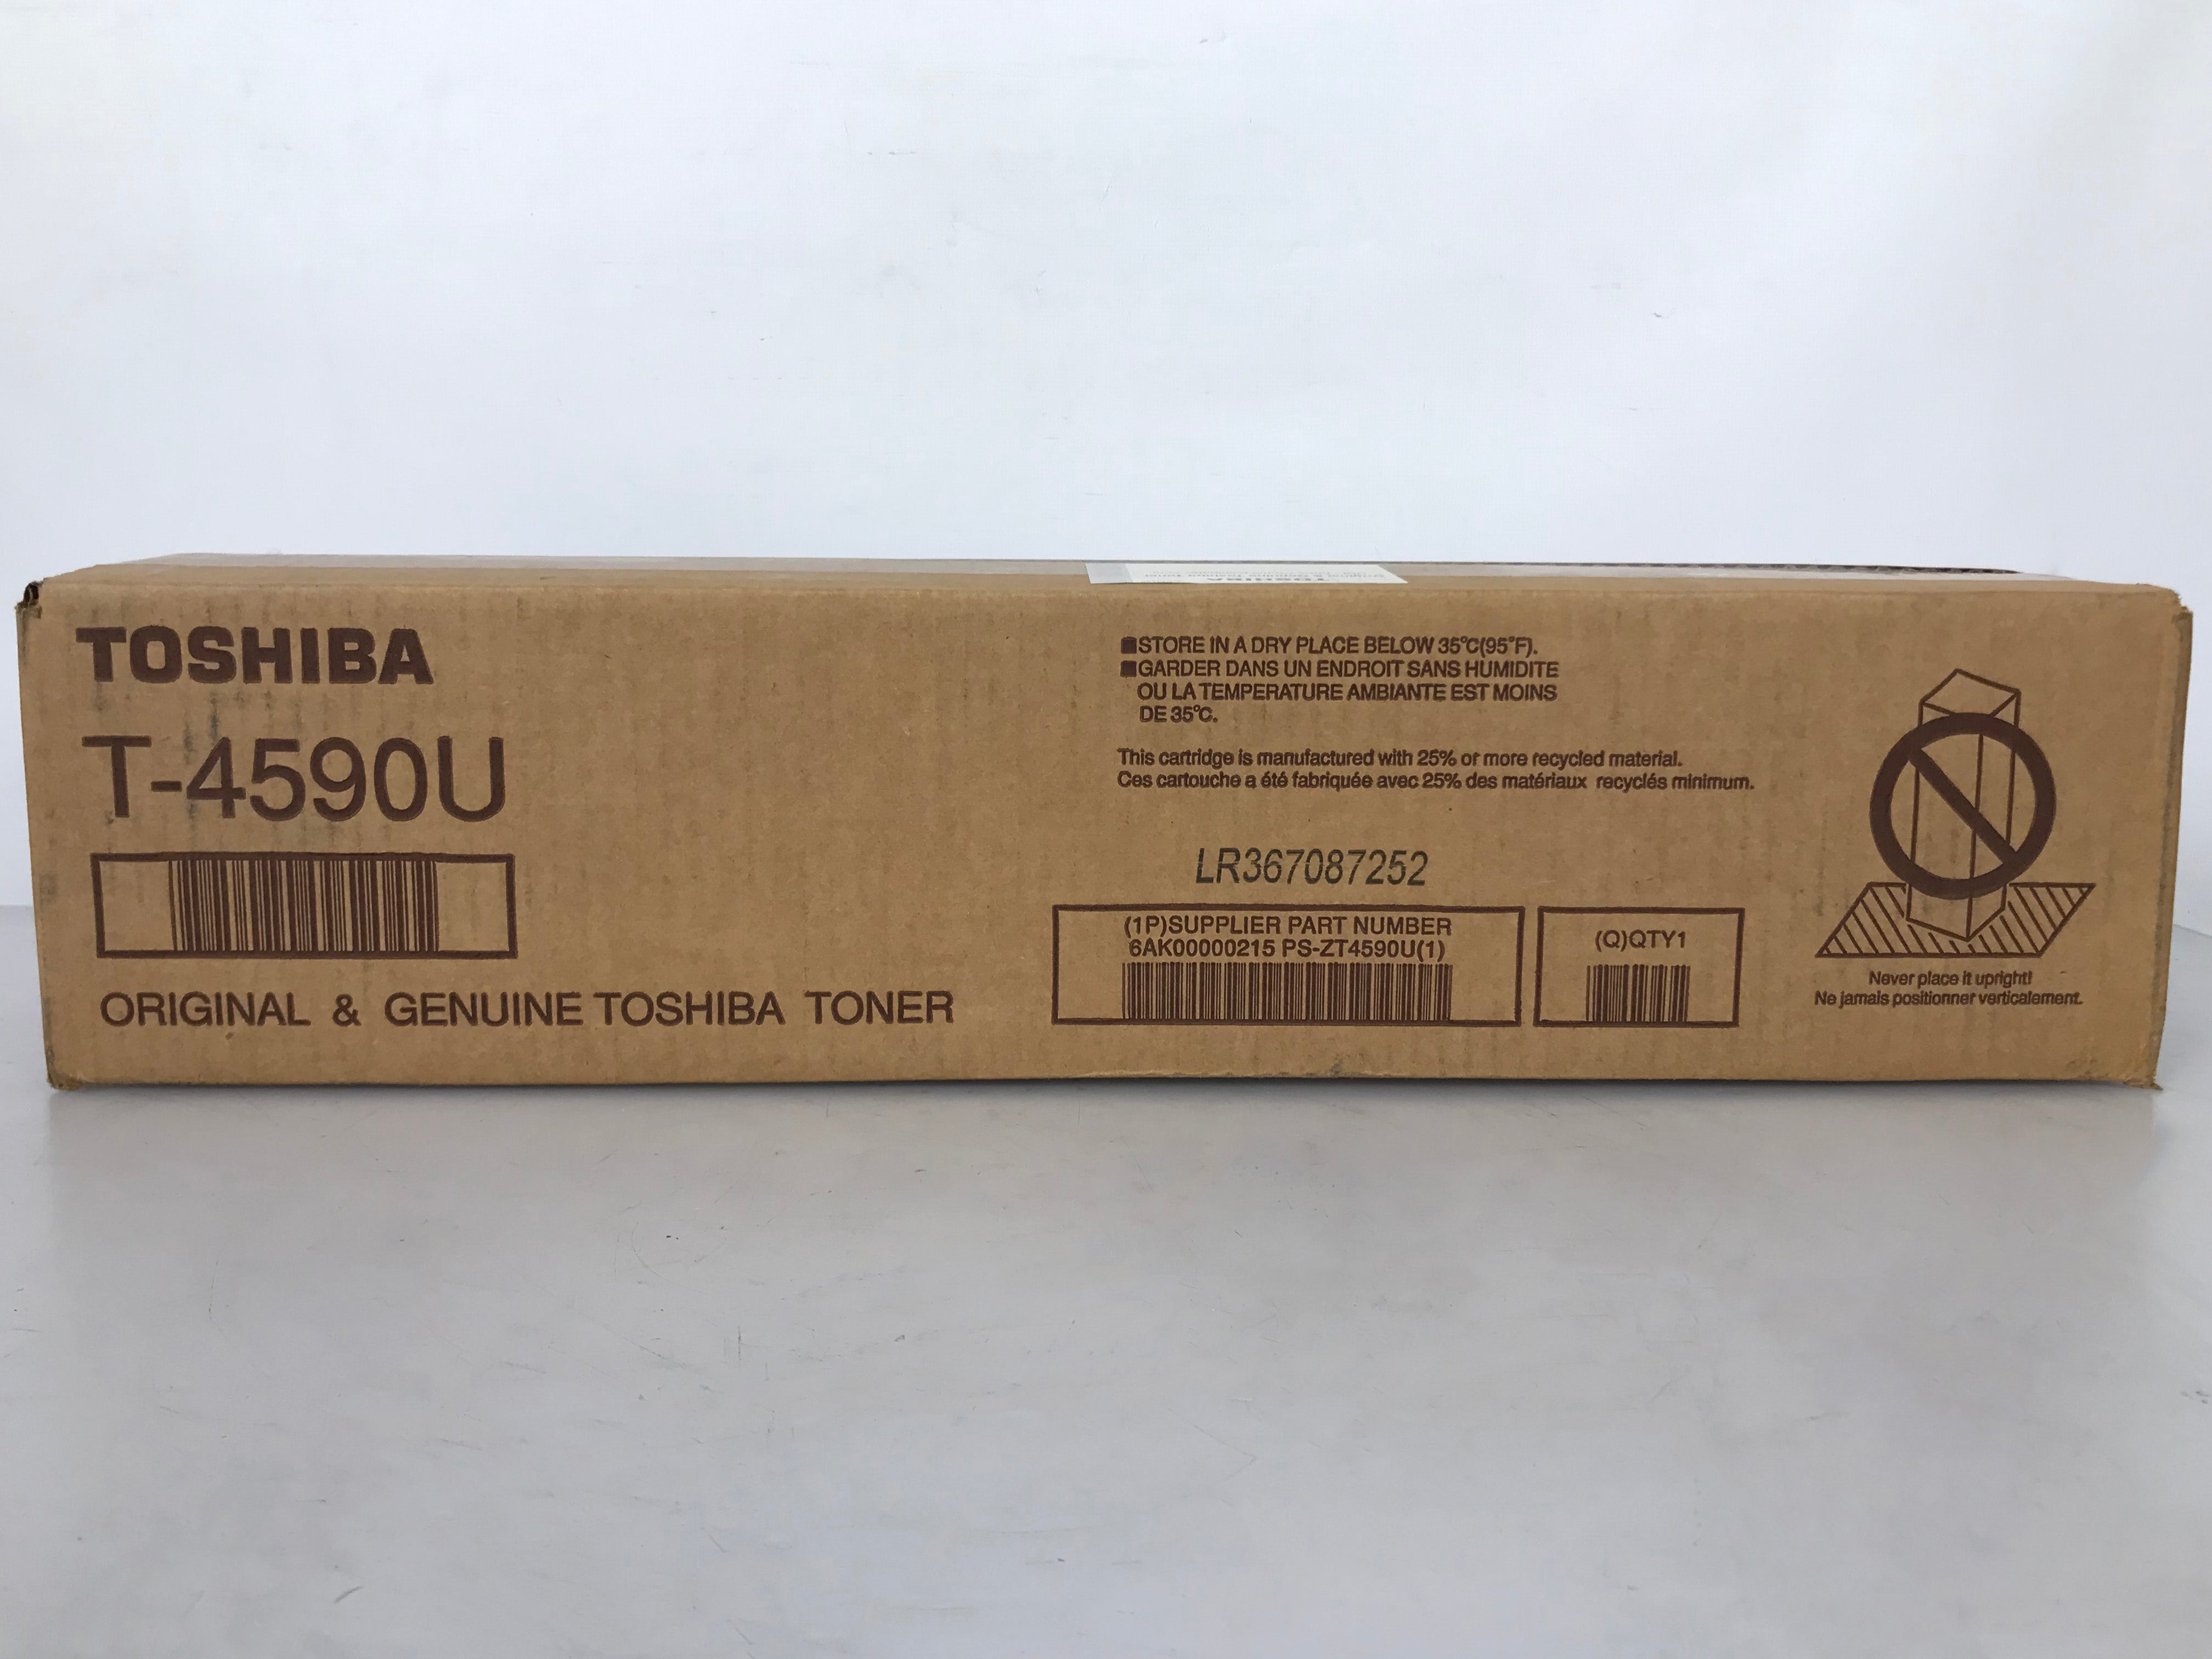 Toshiba T-4590U Black Ink Cartridge